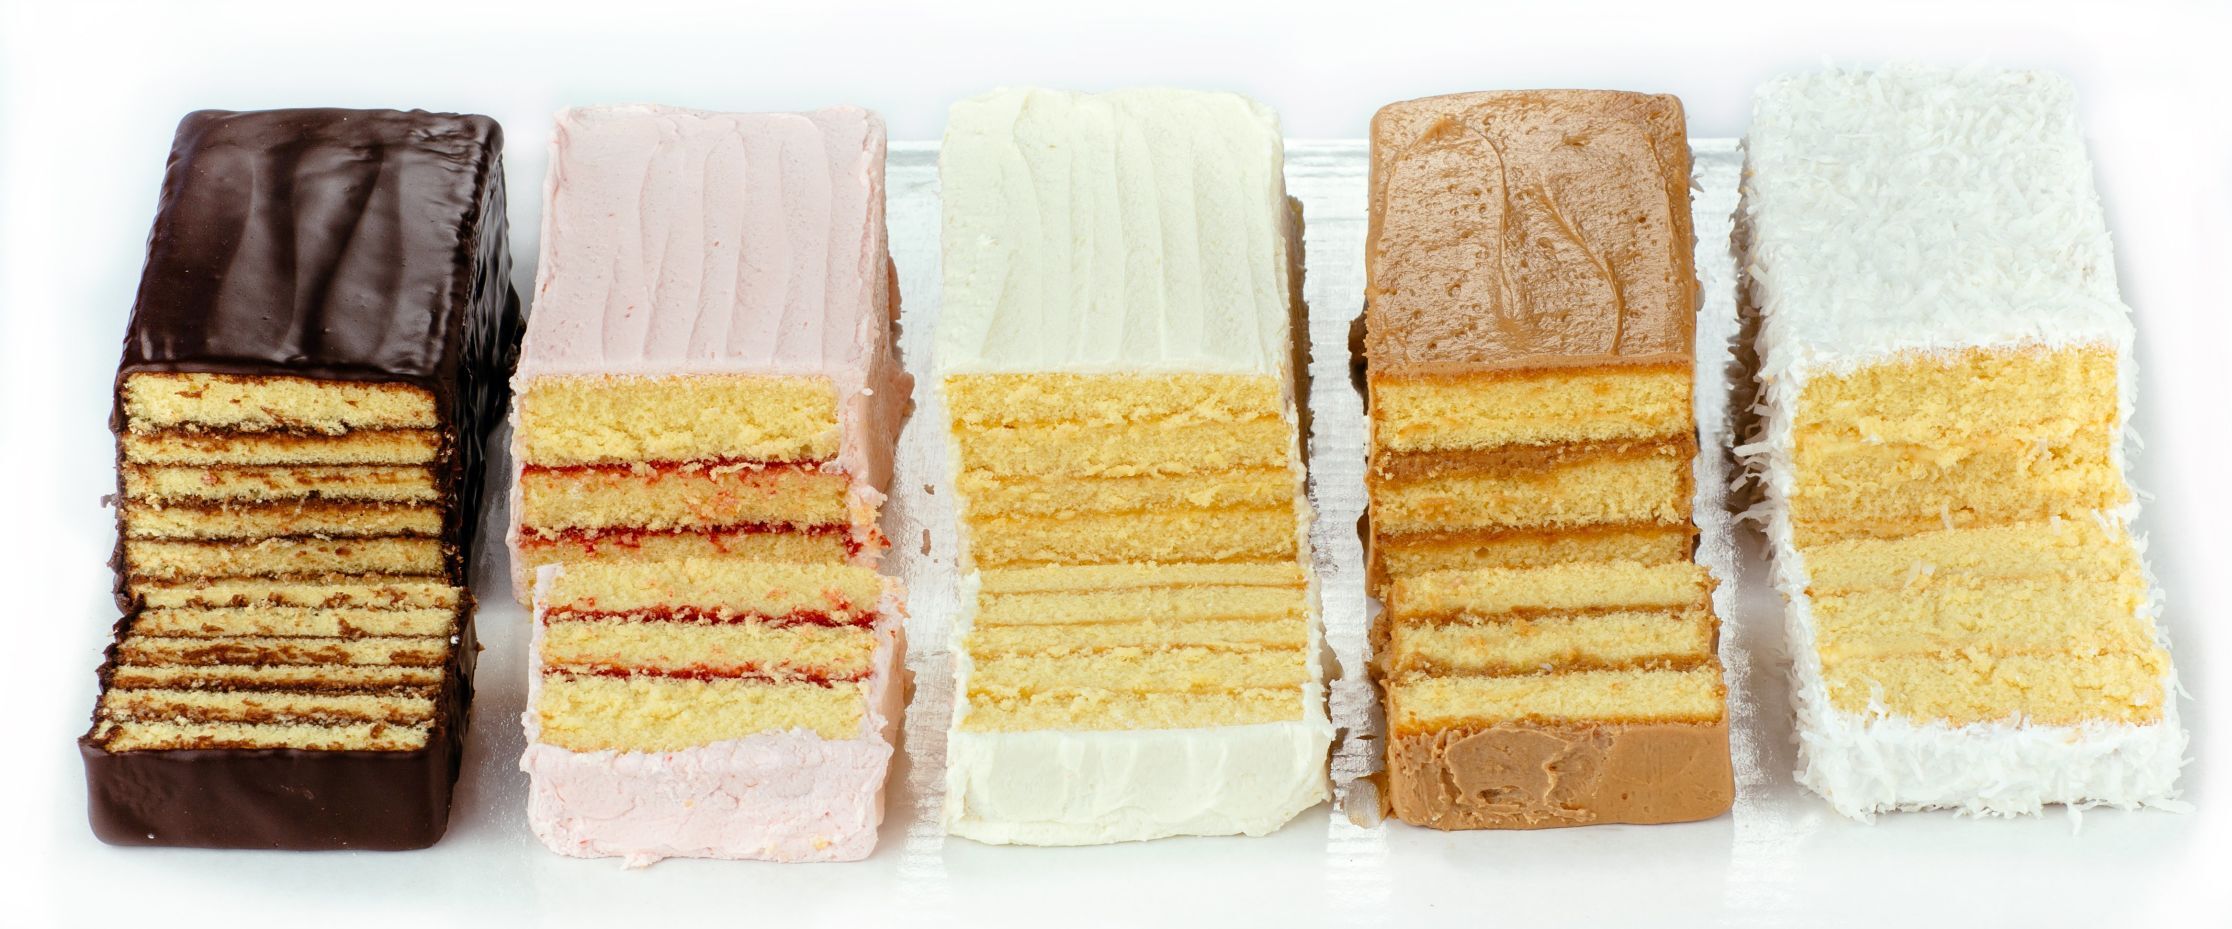 Miss Hulling's split layer cakes